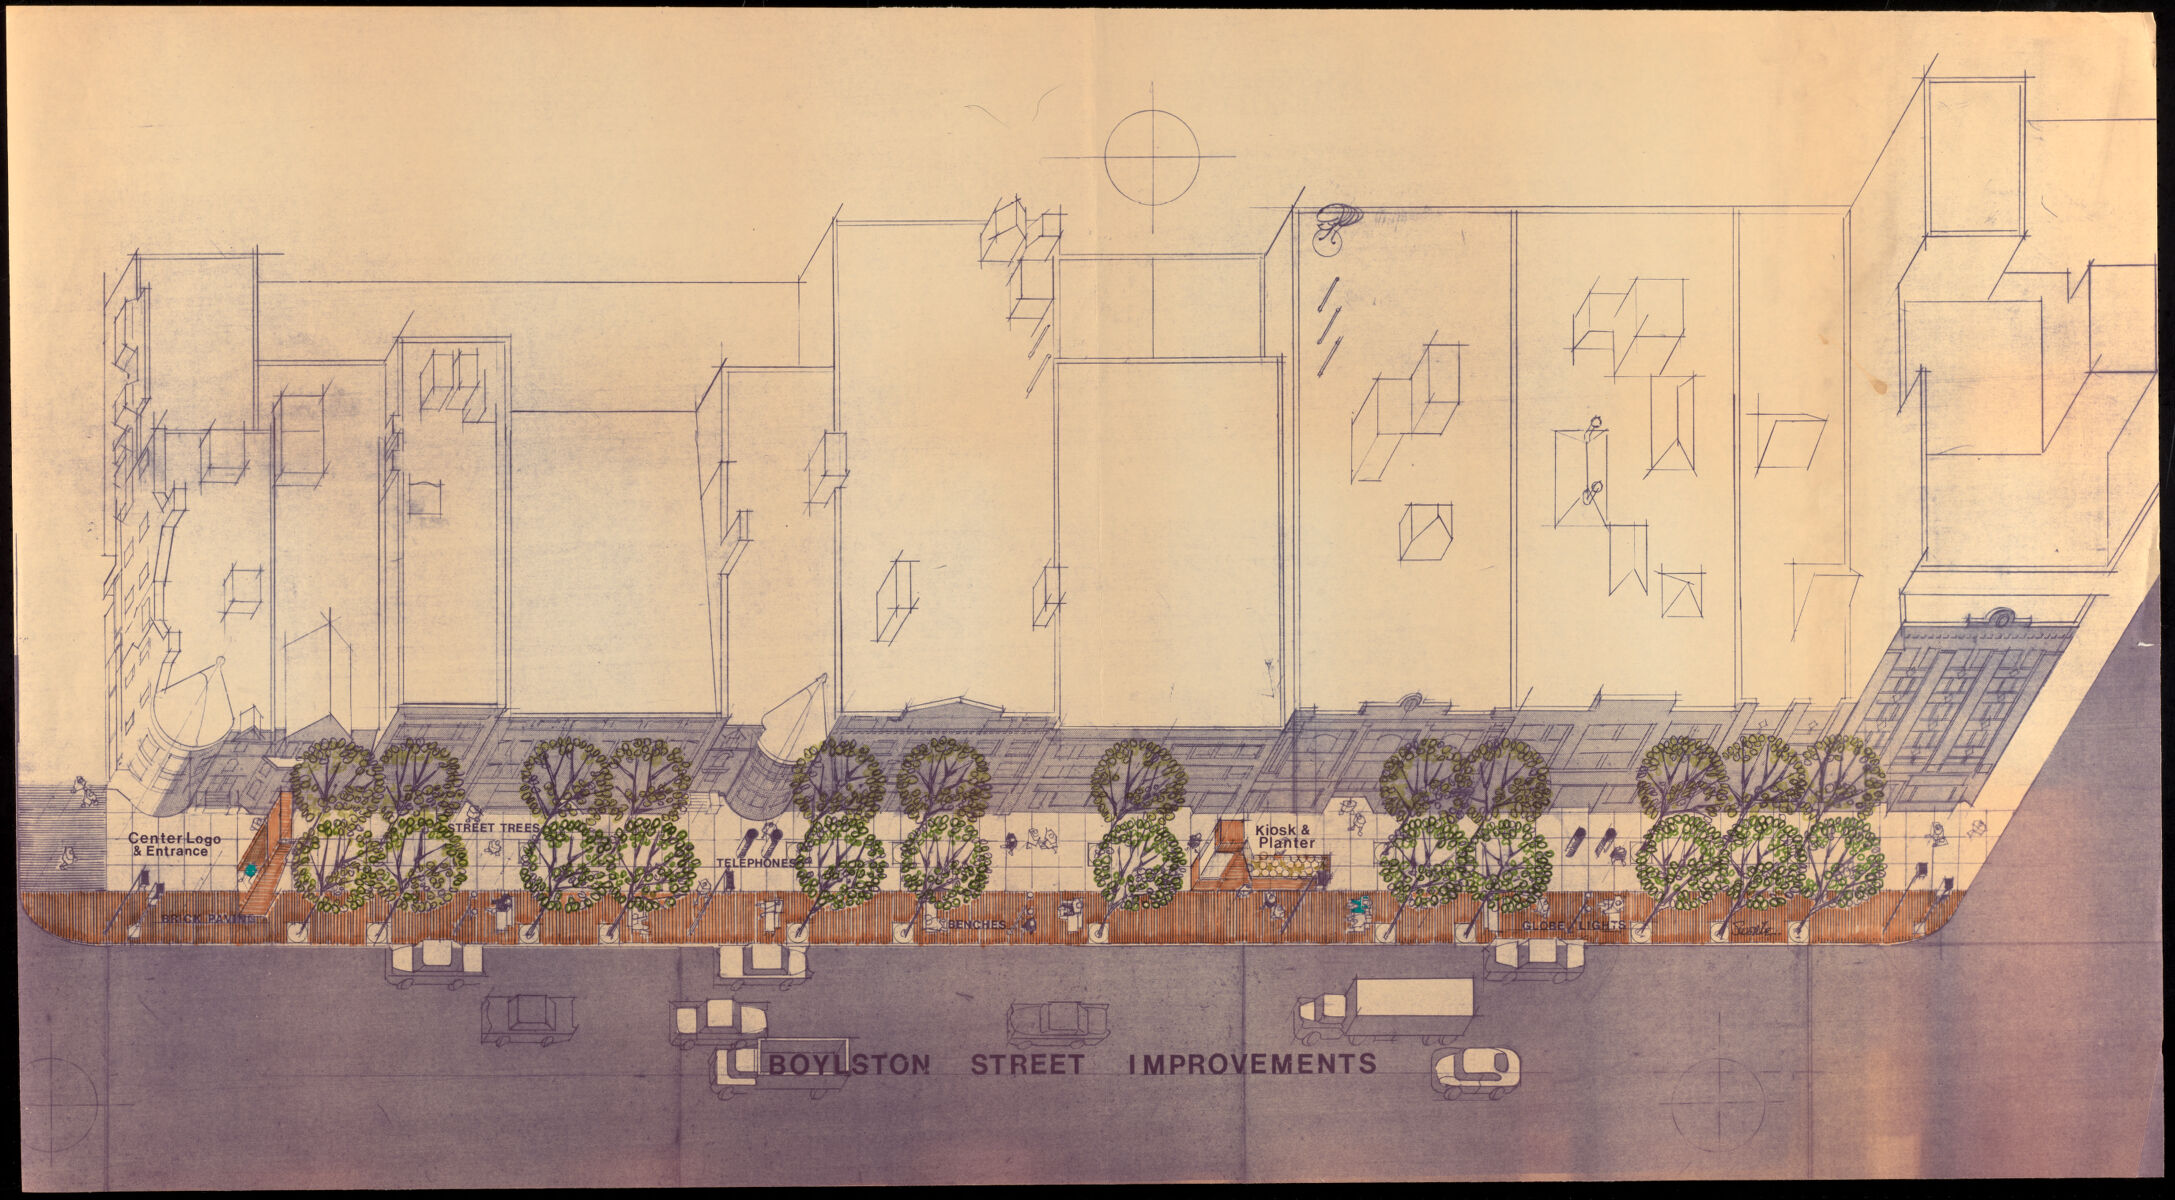 A ca. 1970s plan of Boylston Street